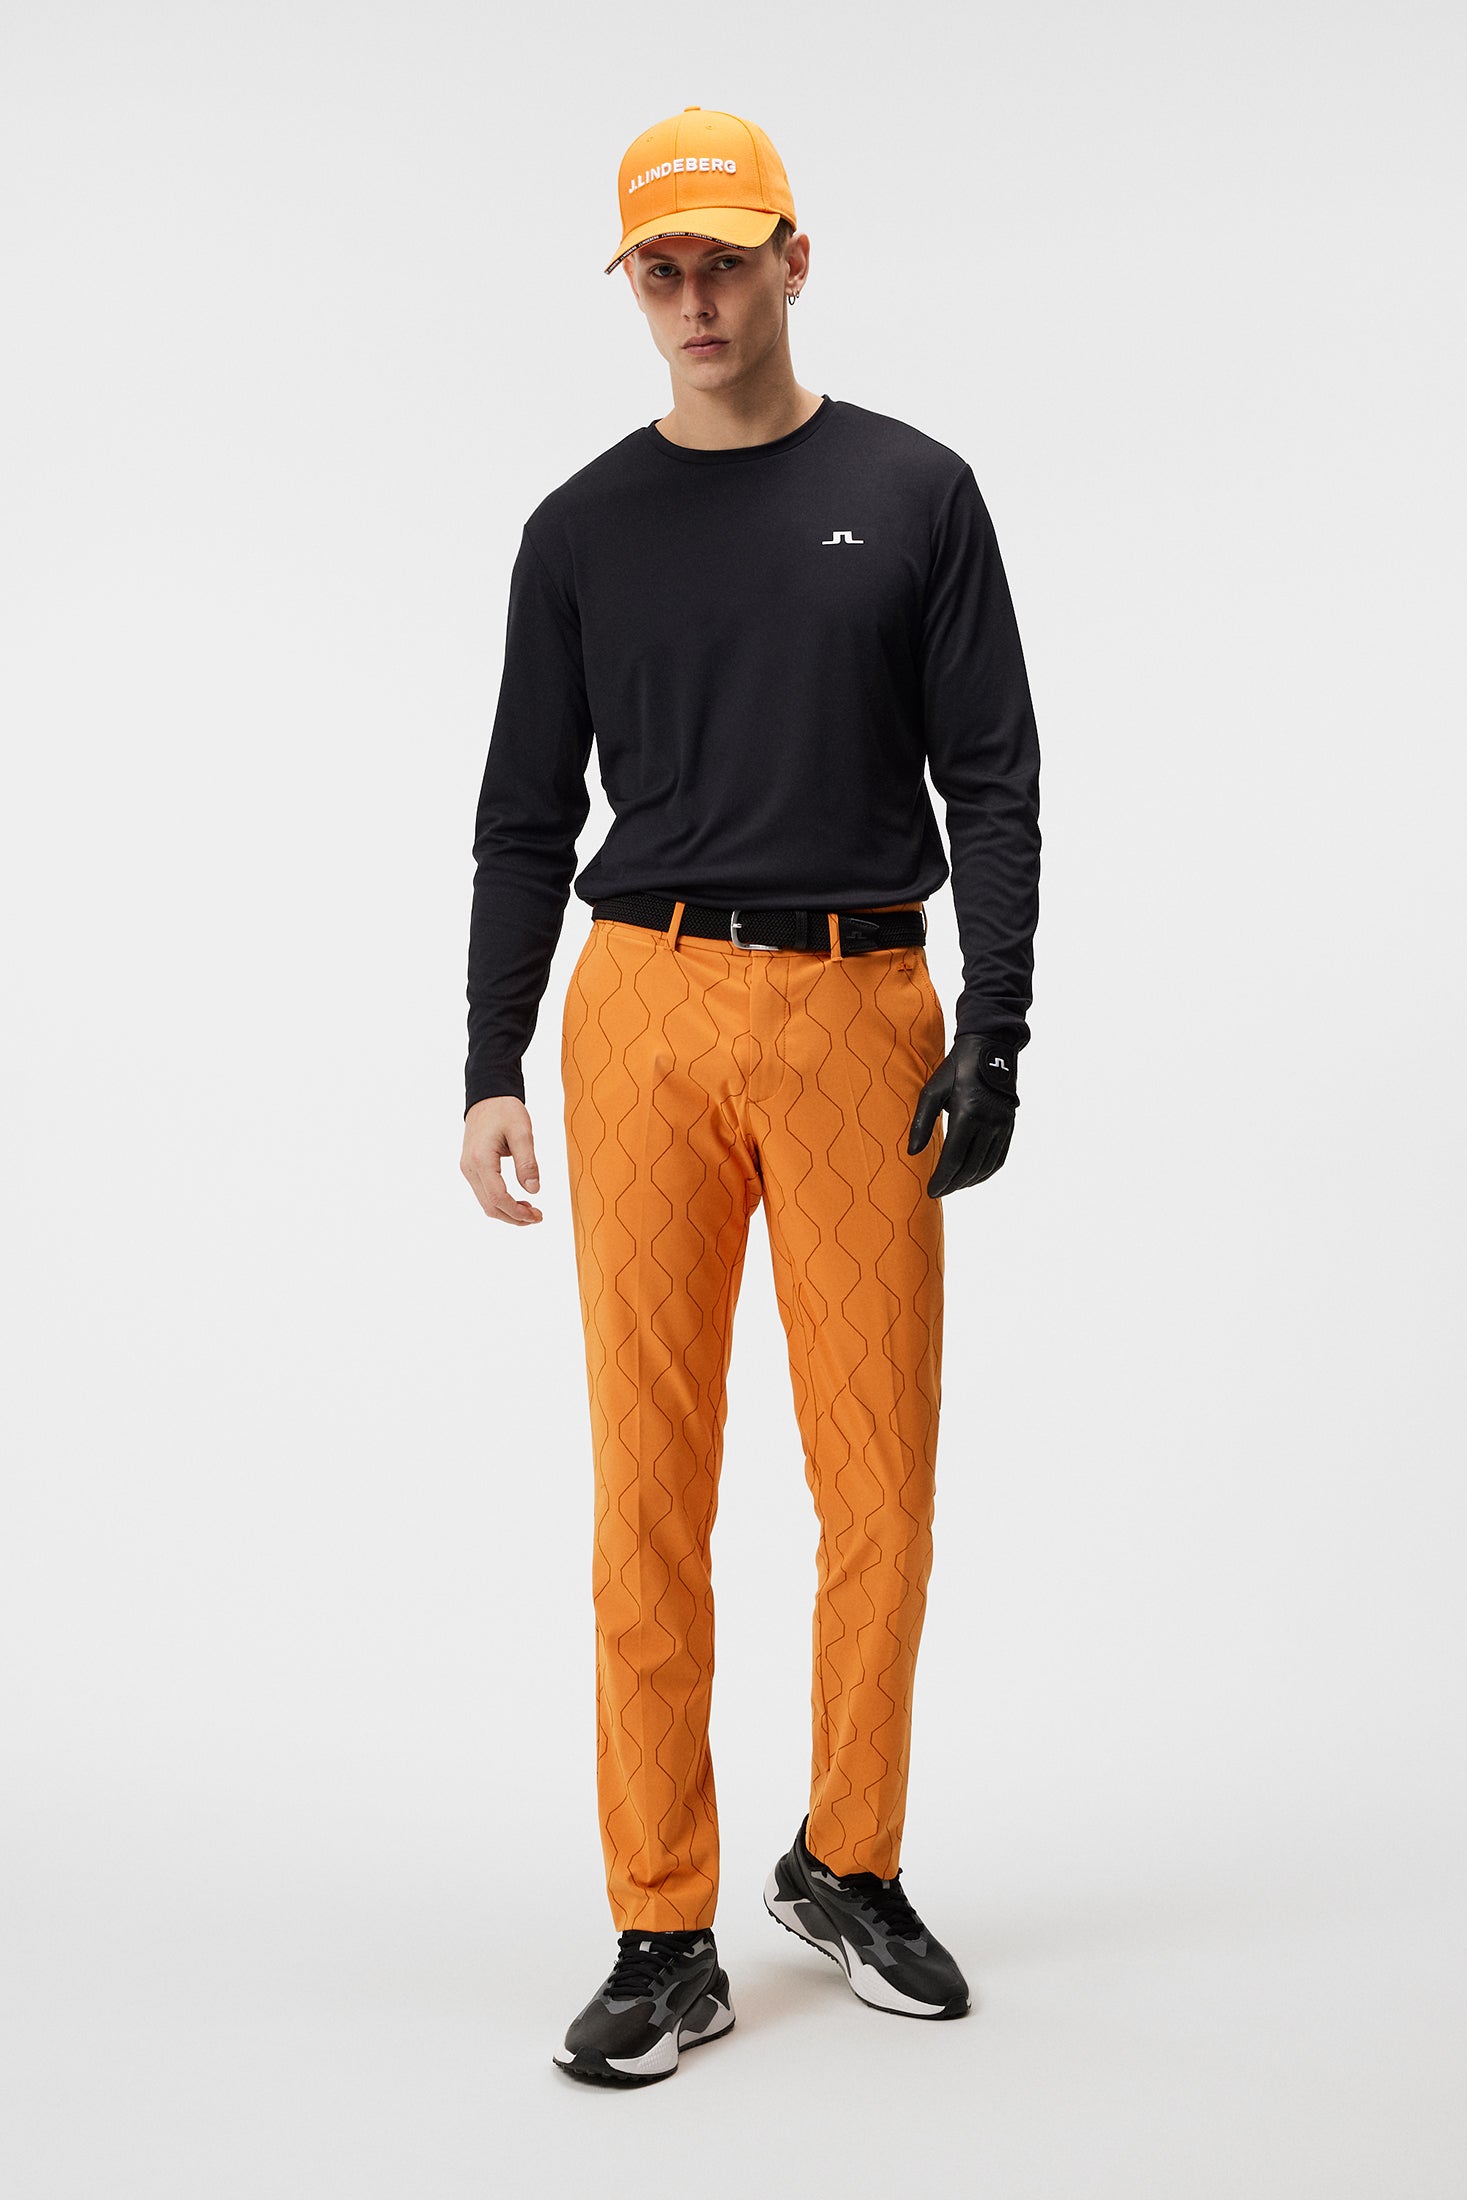 Orange Blazer Trousers Men's Suits Slim Fit Groom Tuxedo Wedding Business  Party Male Clothing Custom Made 3Pc Jacket Pants Vest - AliExpress